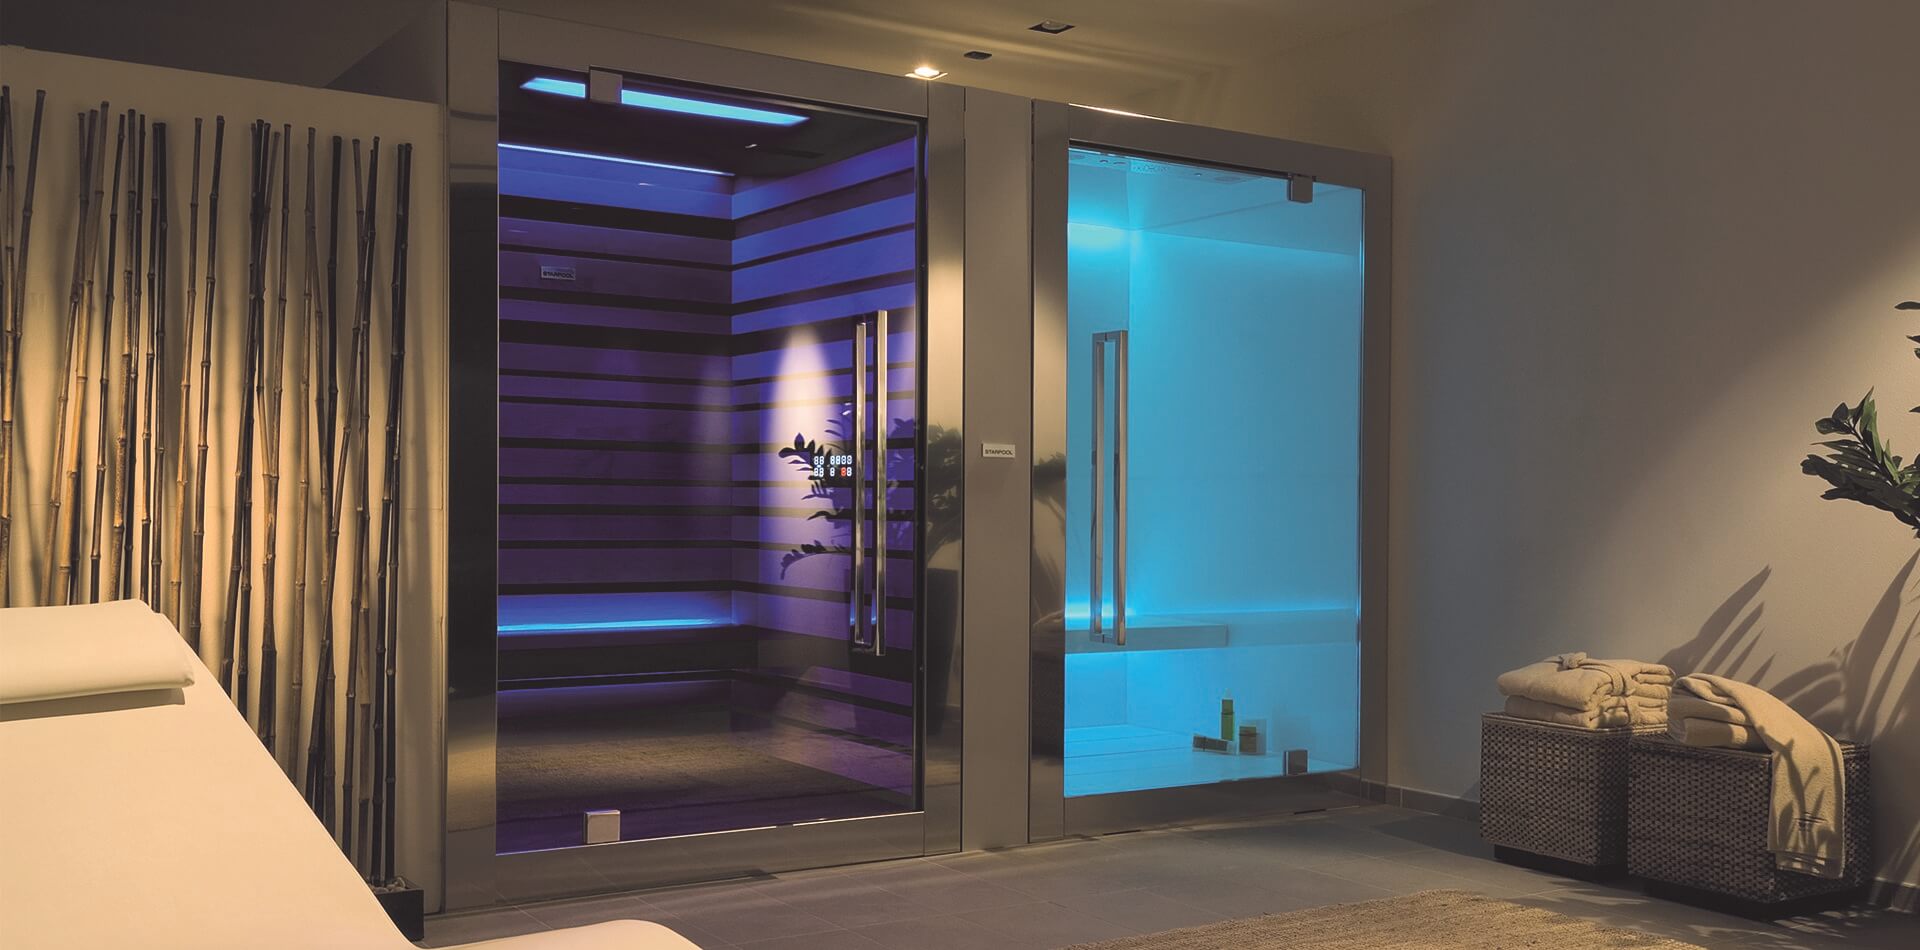 Beleuchtung im Badezimmer Design inkl. Sauna